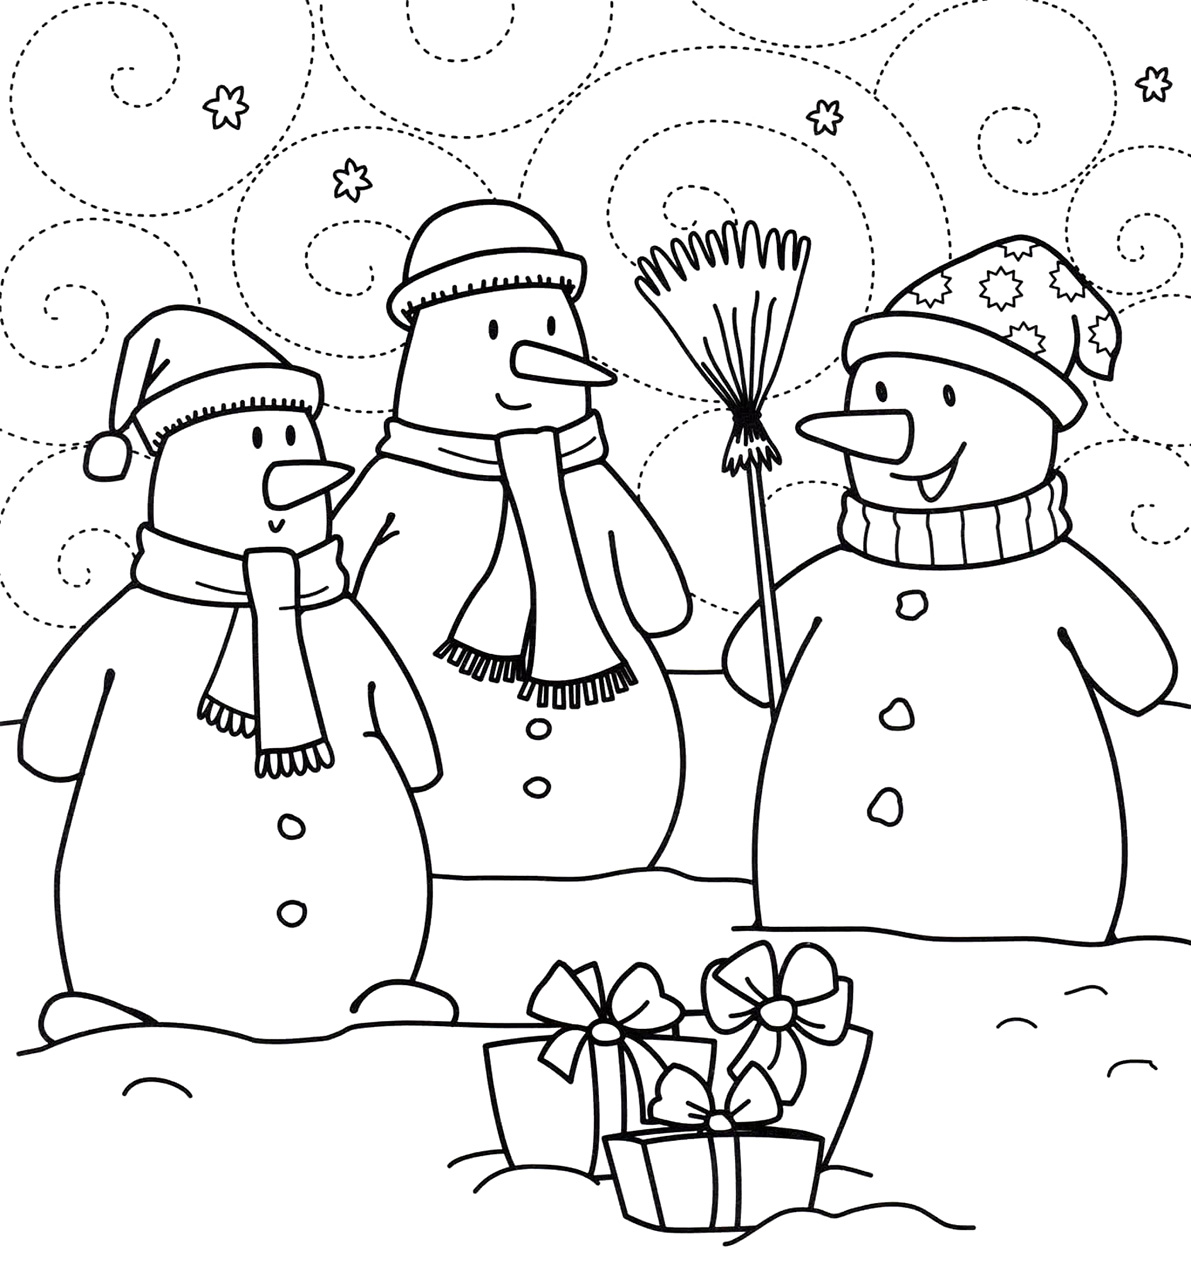 Снеговики и новогодние подарки